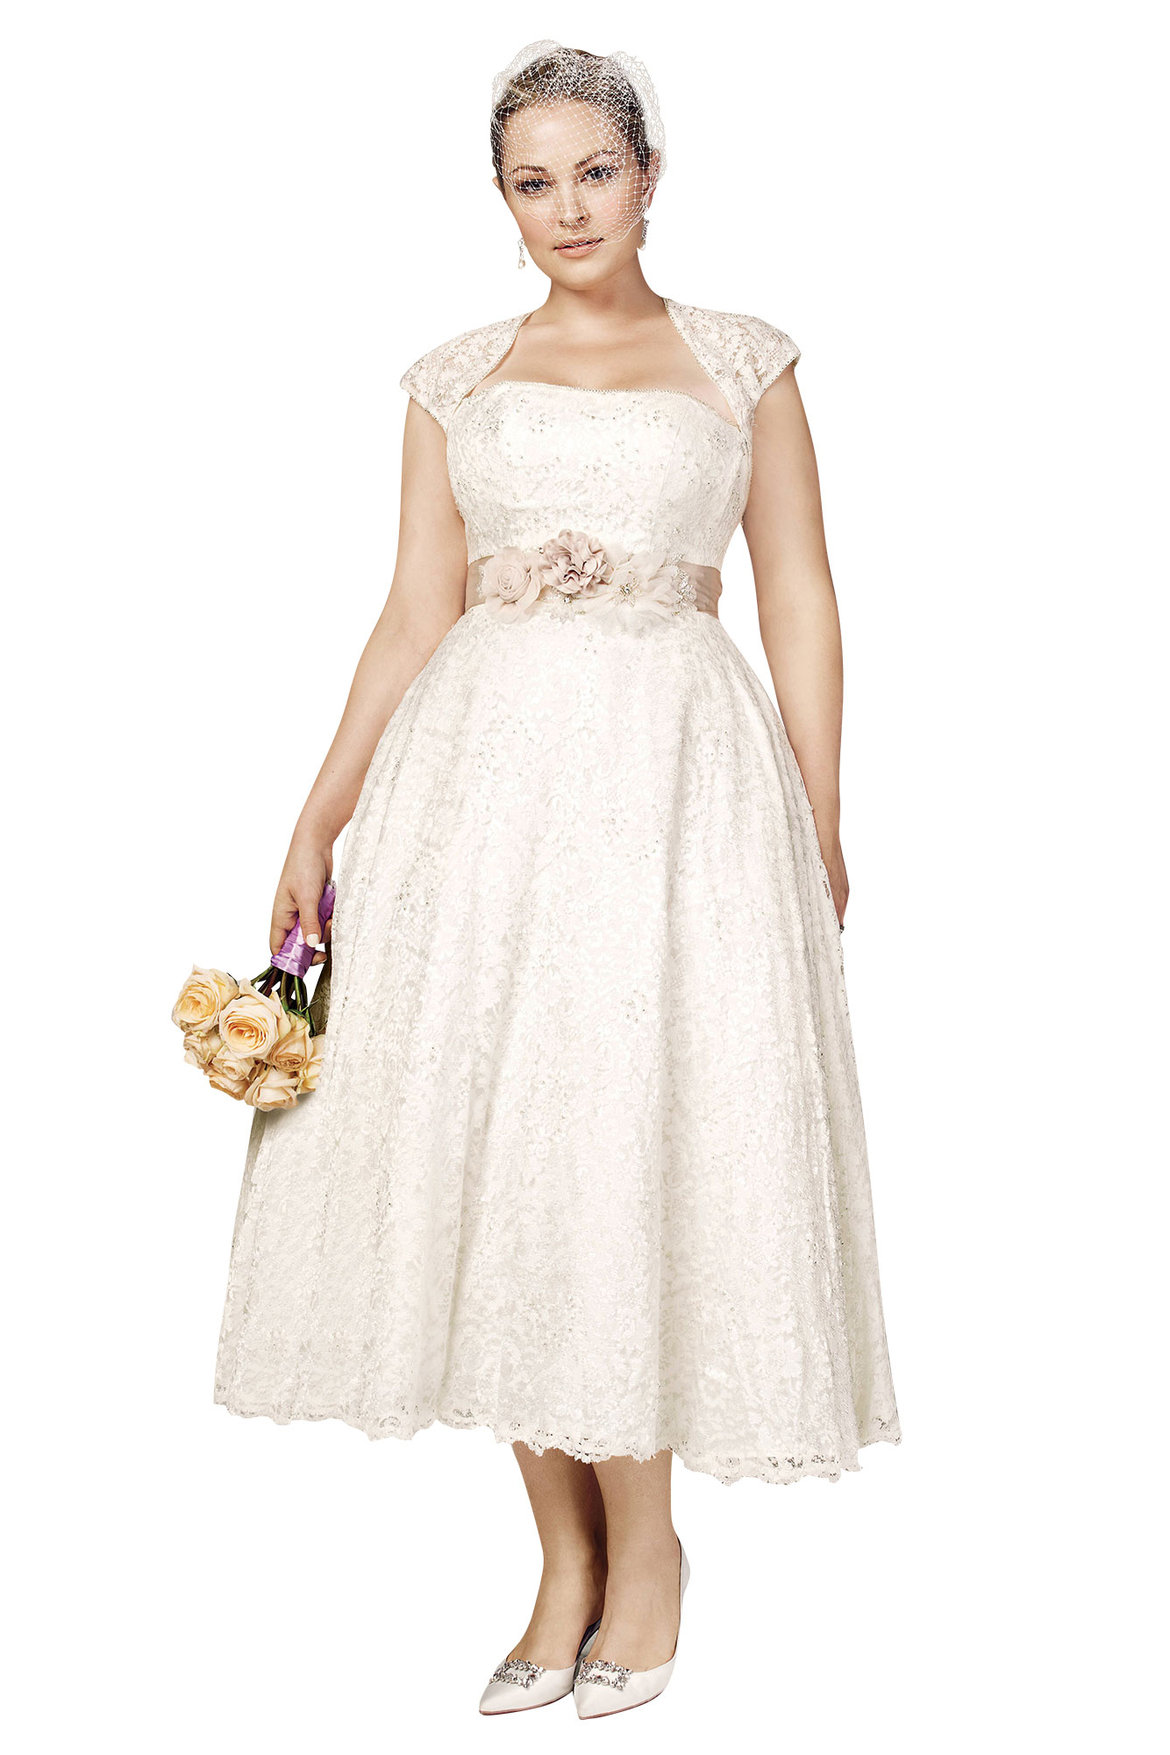 davids bridal wedding gown